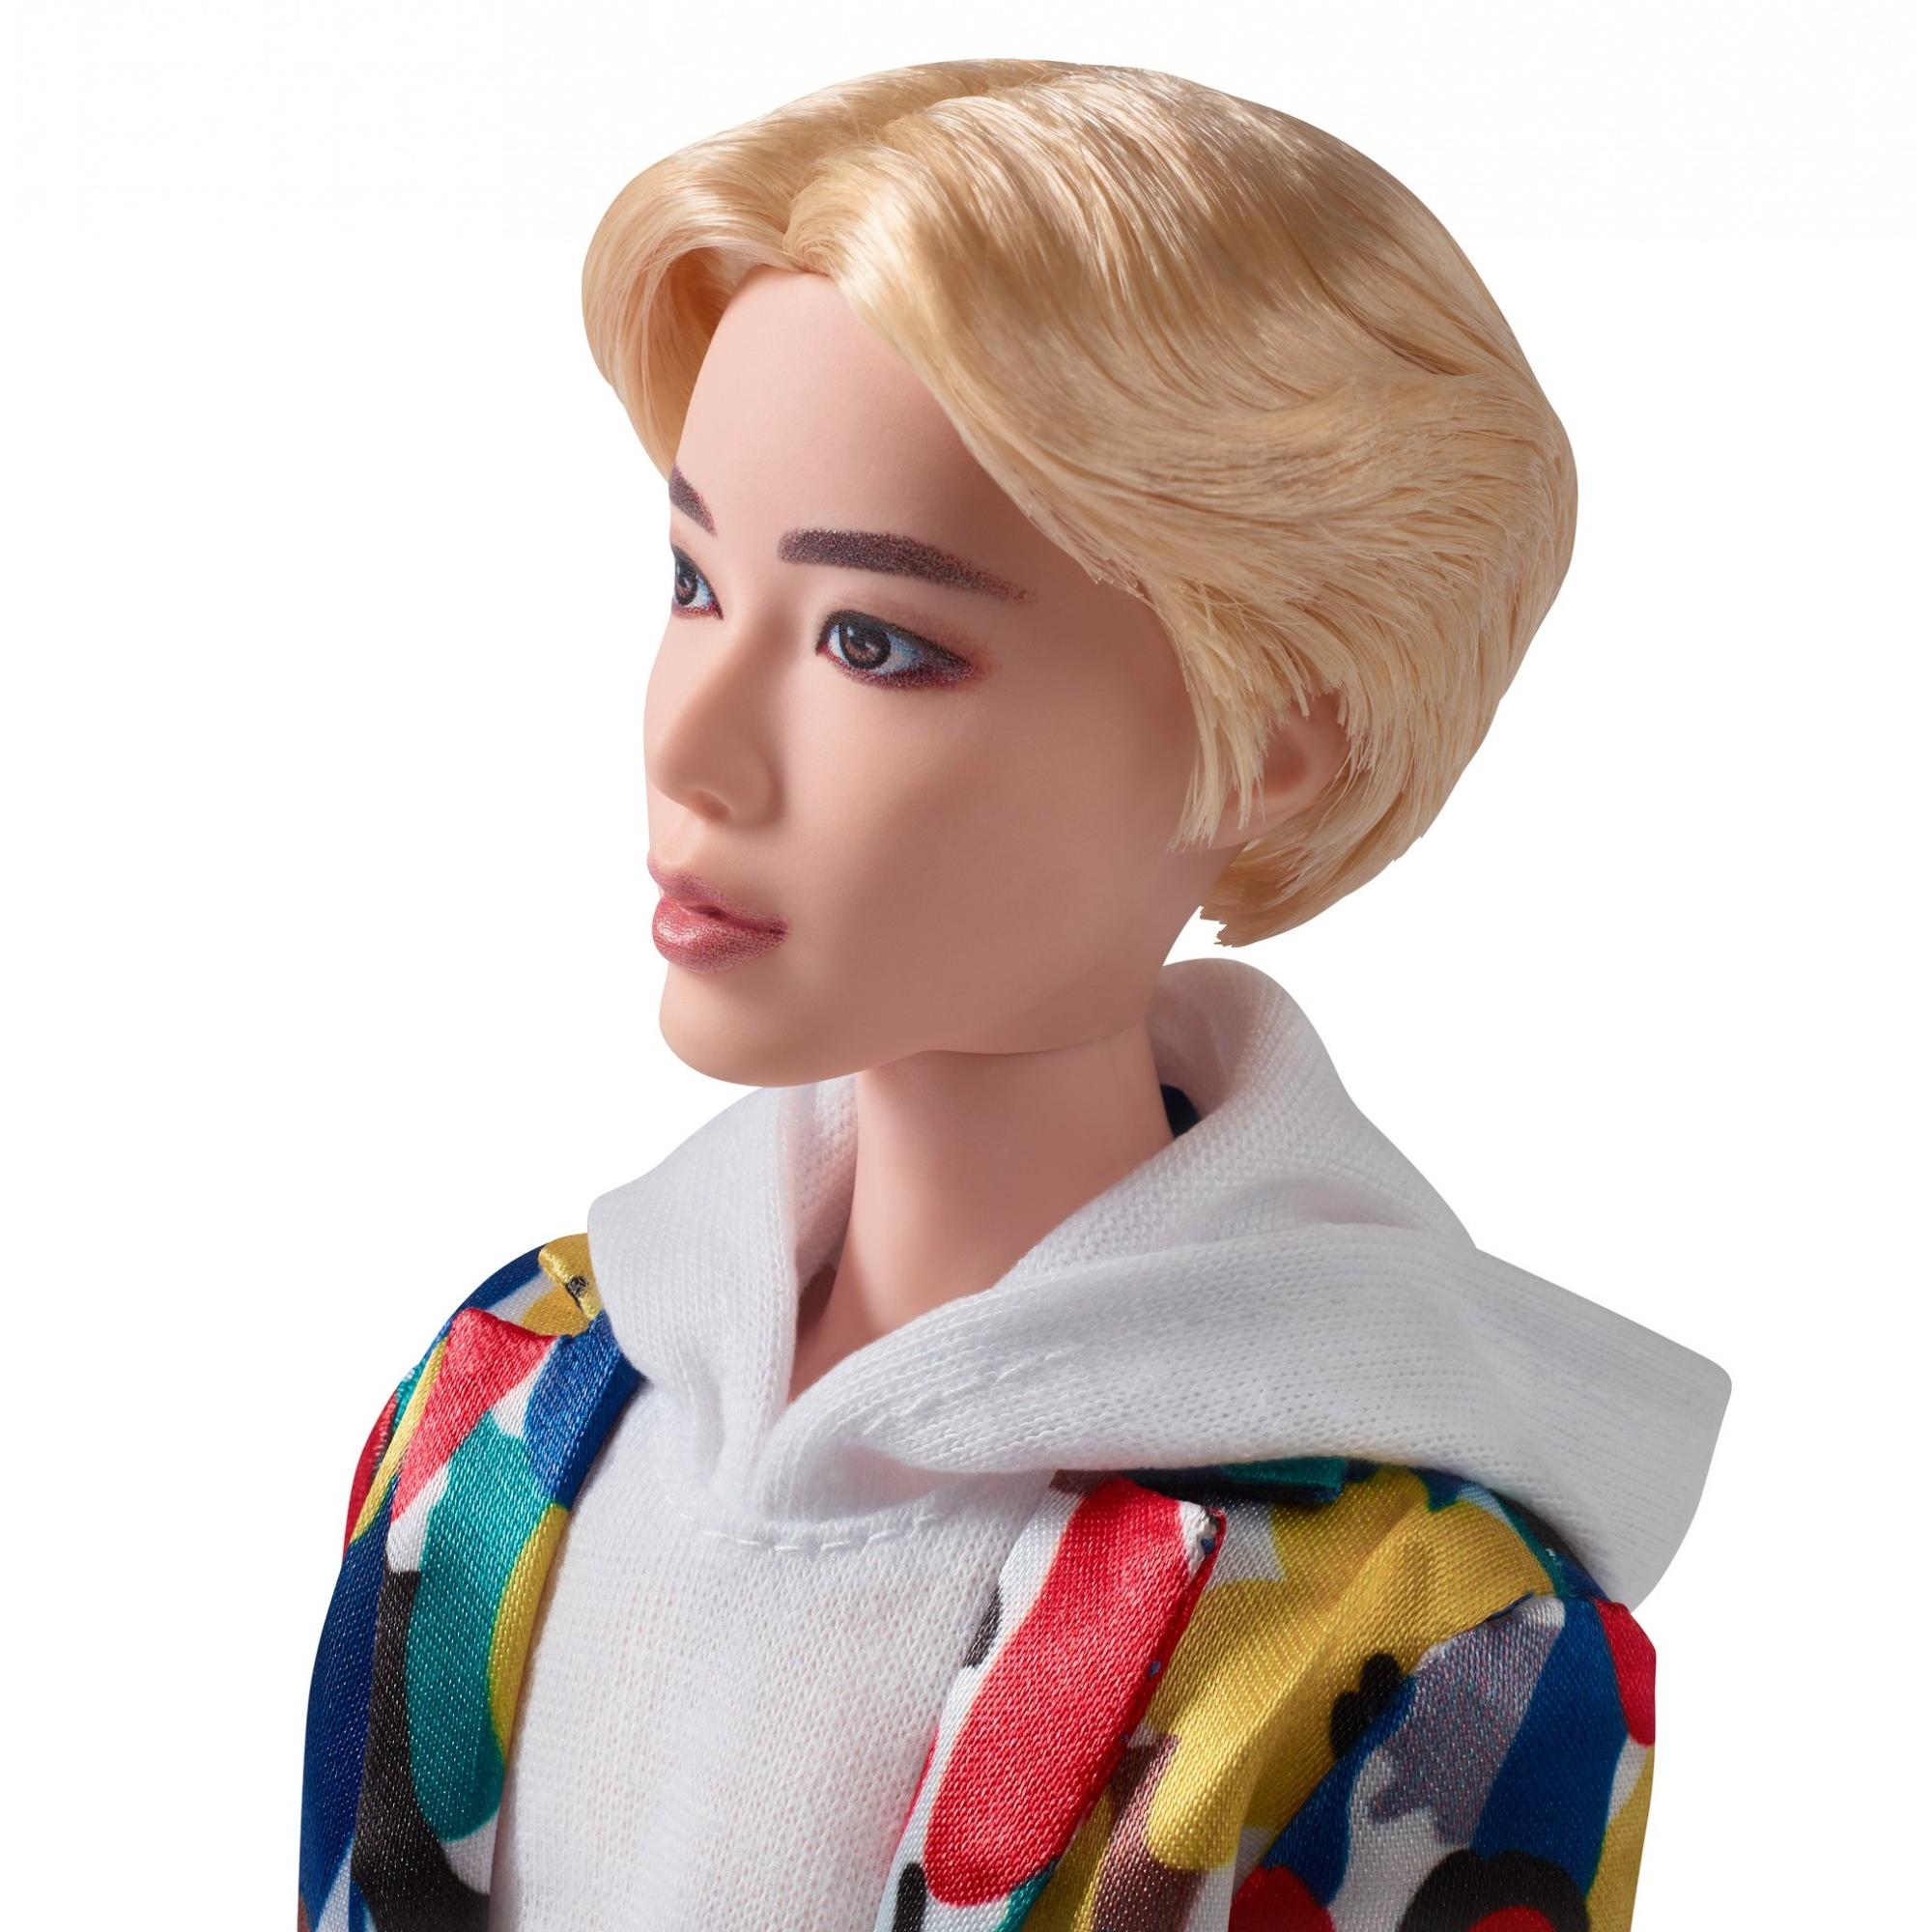 Bts Jin Idol Doll - image 3 of 8